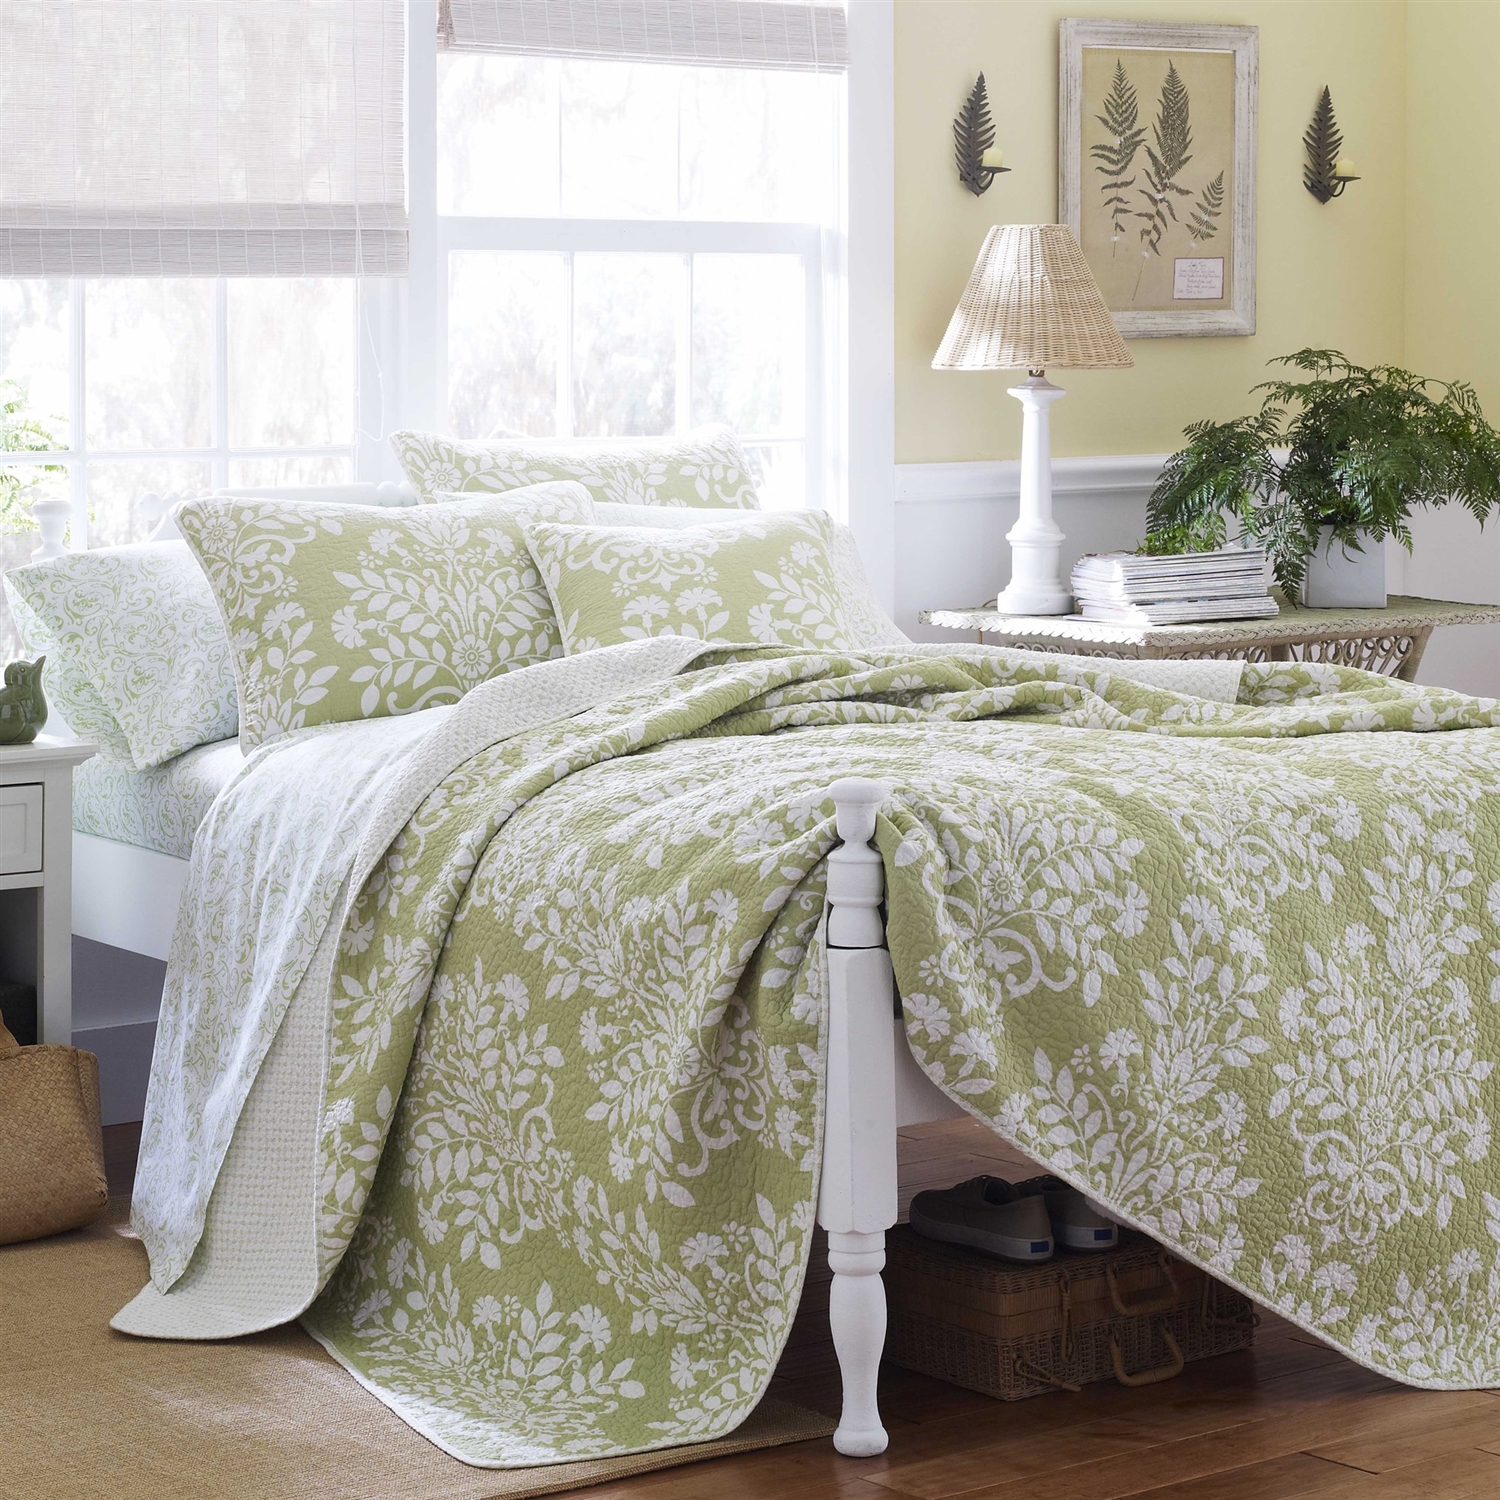 King size 100% Cotton 3 Piece Quilt Set in Sage Green White Floral Pattern